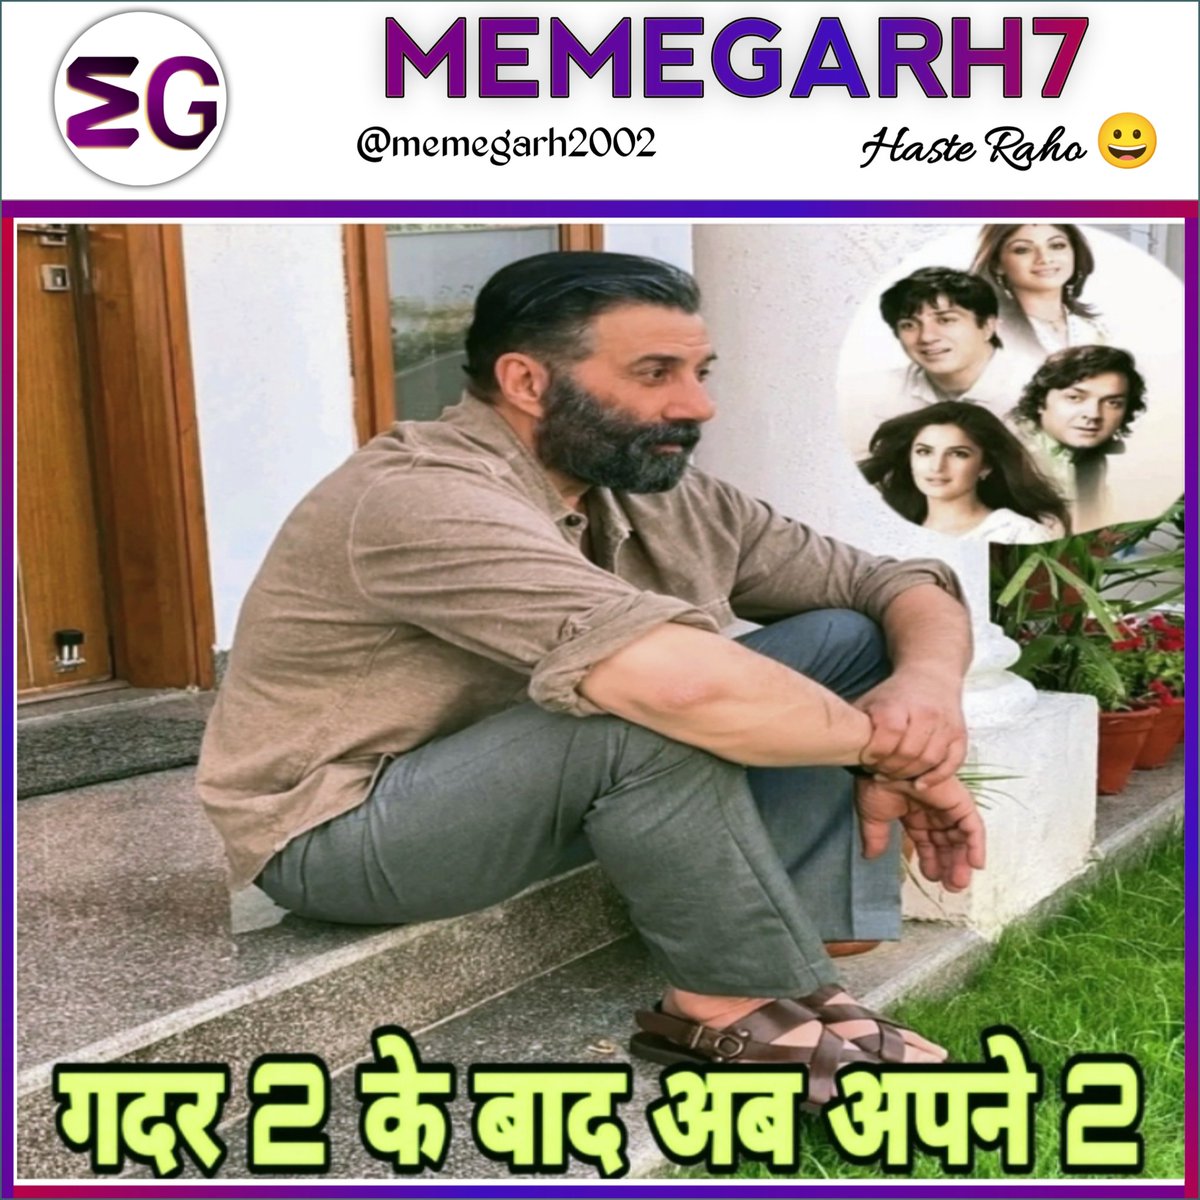 Sare film ka sequel bna dalunga.
#SunnyDeol #bollywood #apne2 #Gadar2 #sequelofgadar #sequelofapne #meme #memeonfilm #memegarh #funnieetmeme #actor #shilpashetty #Trendingmeme #virak